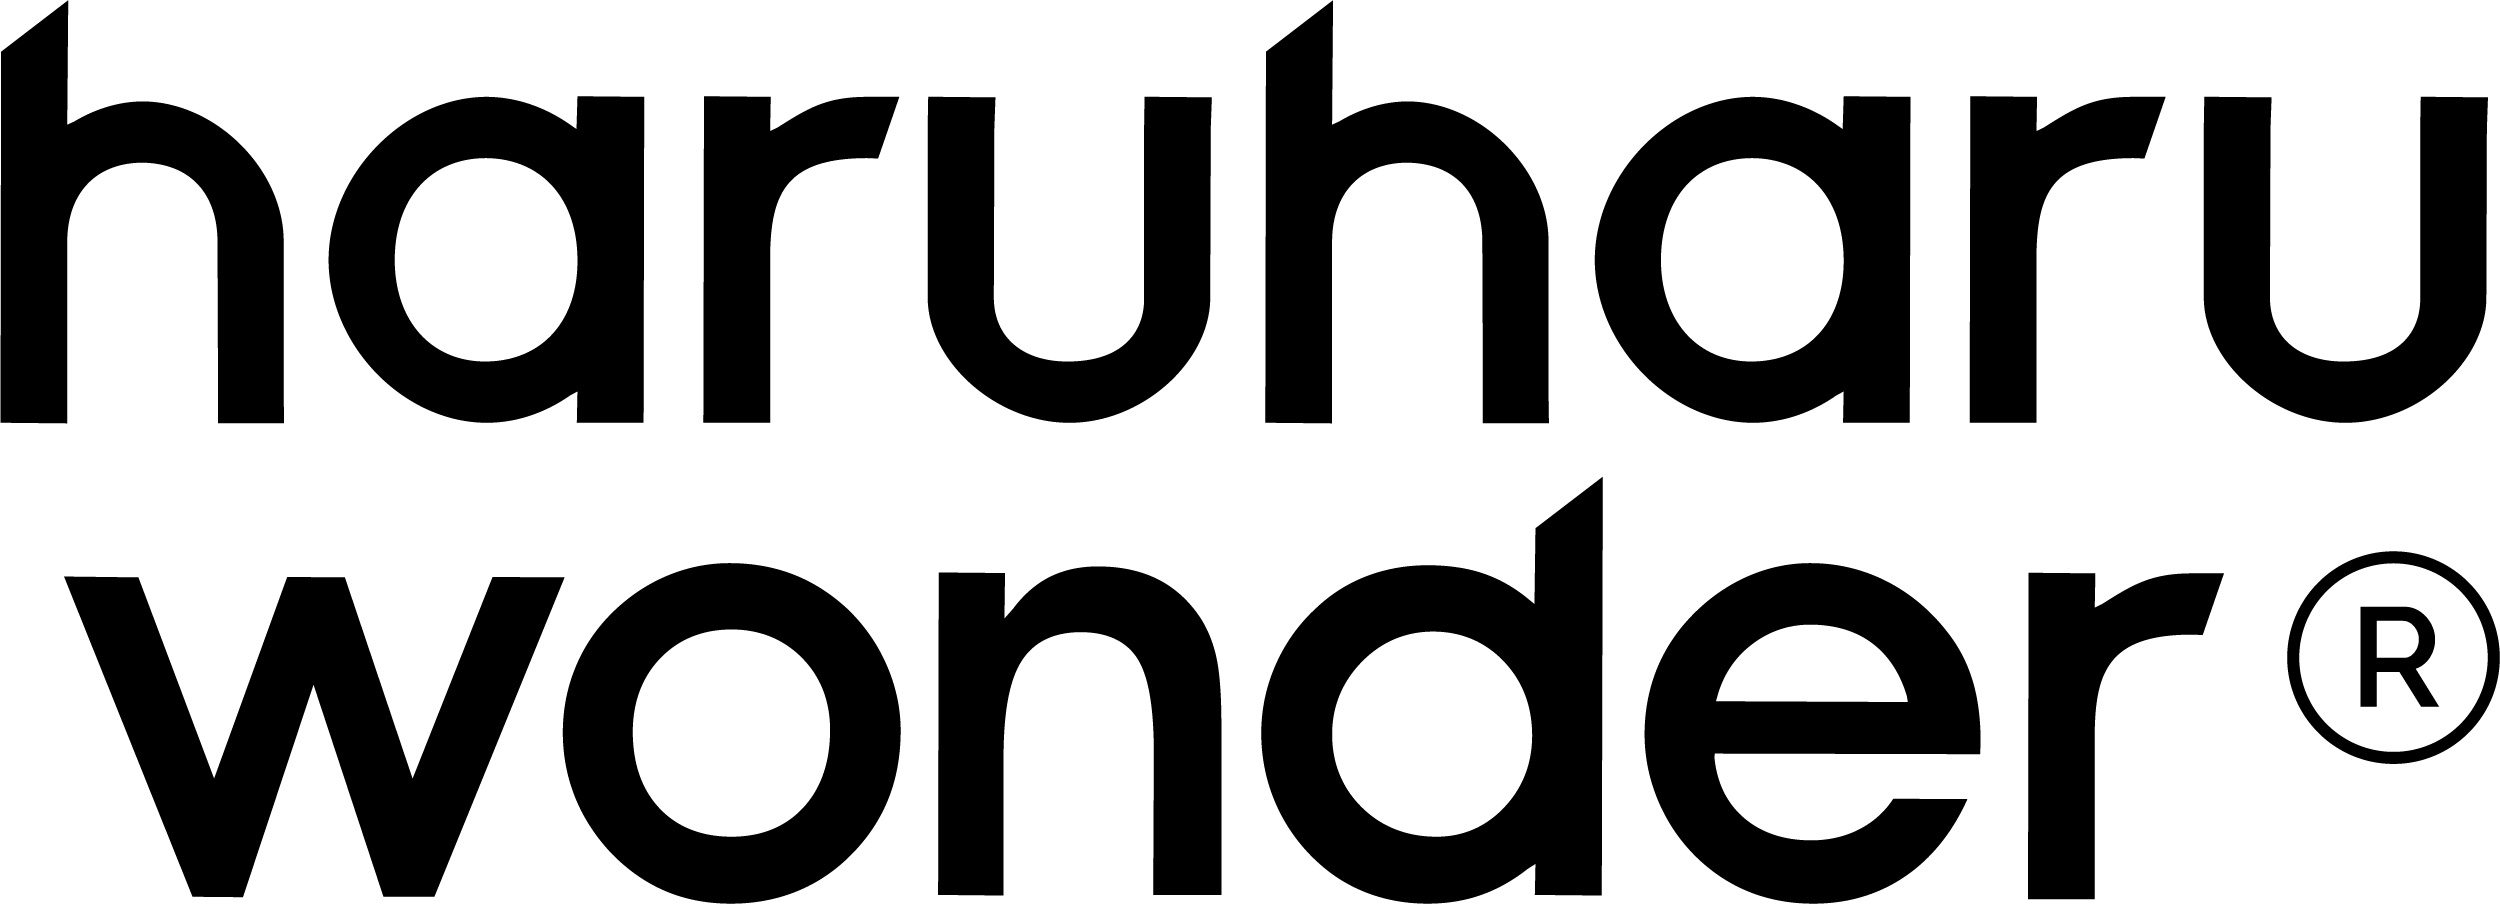 Haruharu Wonder logo